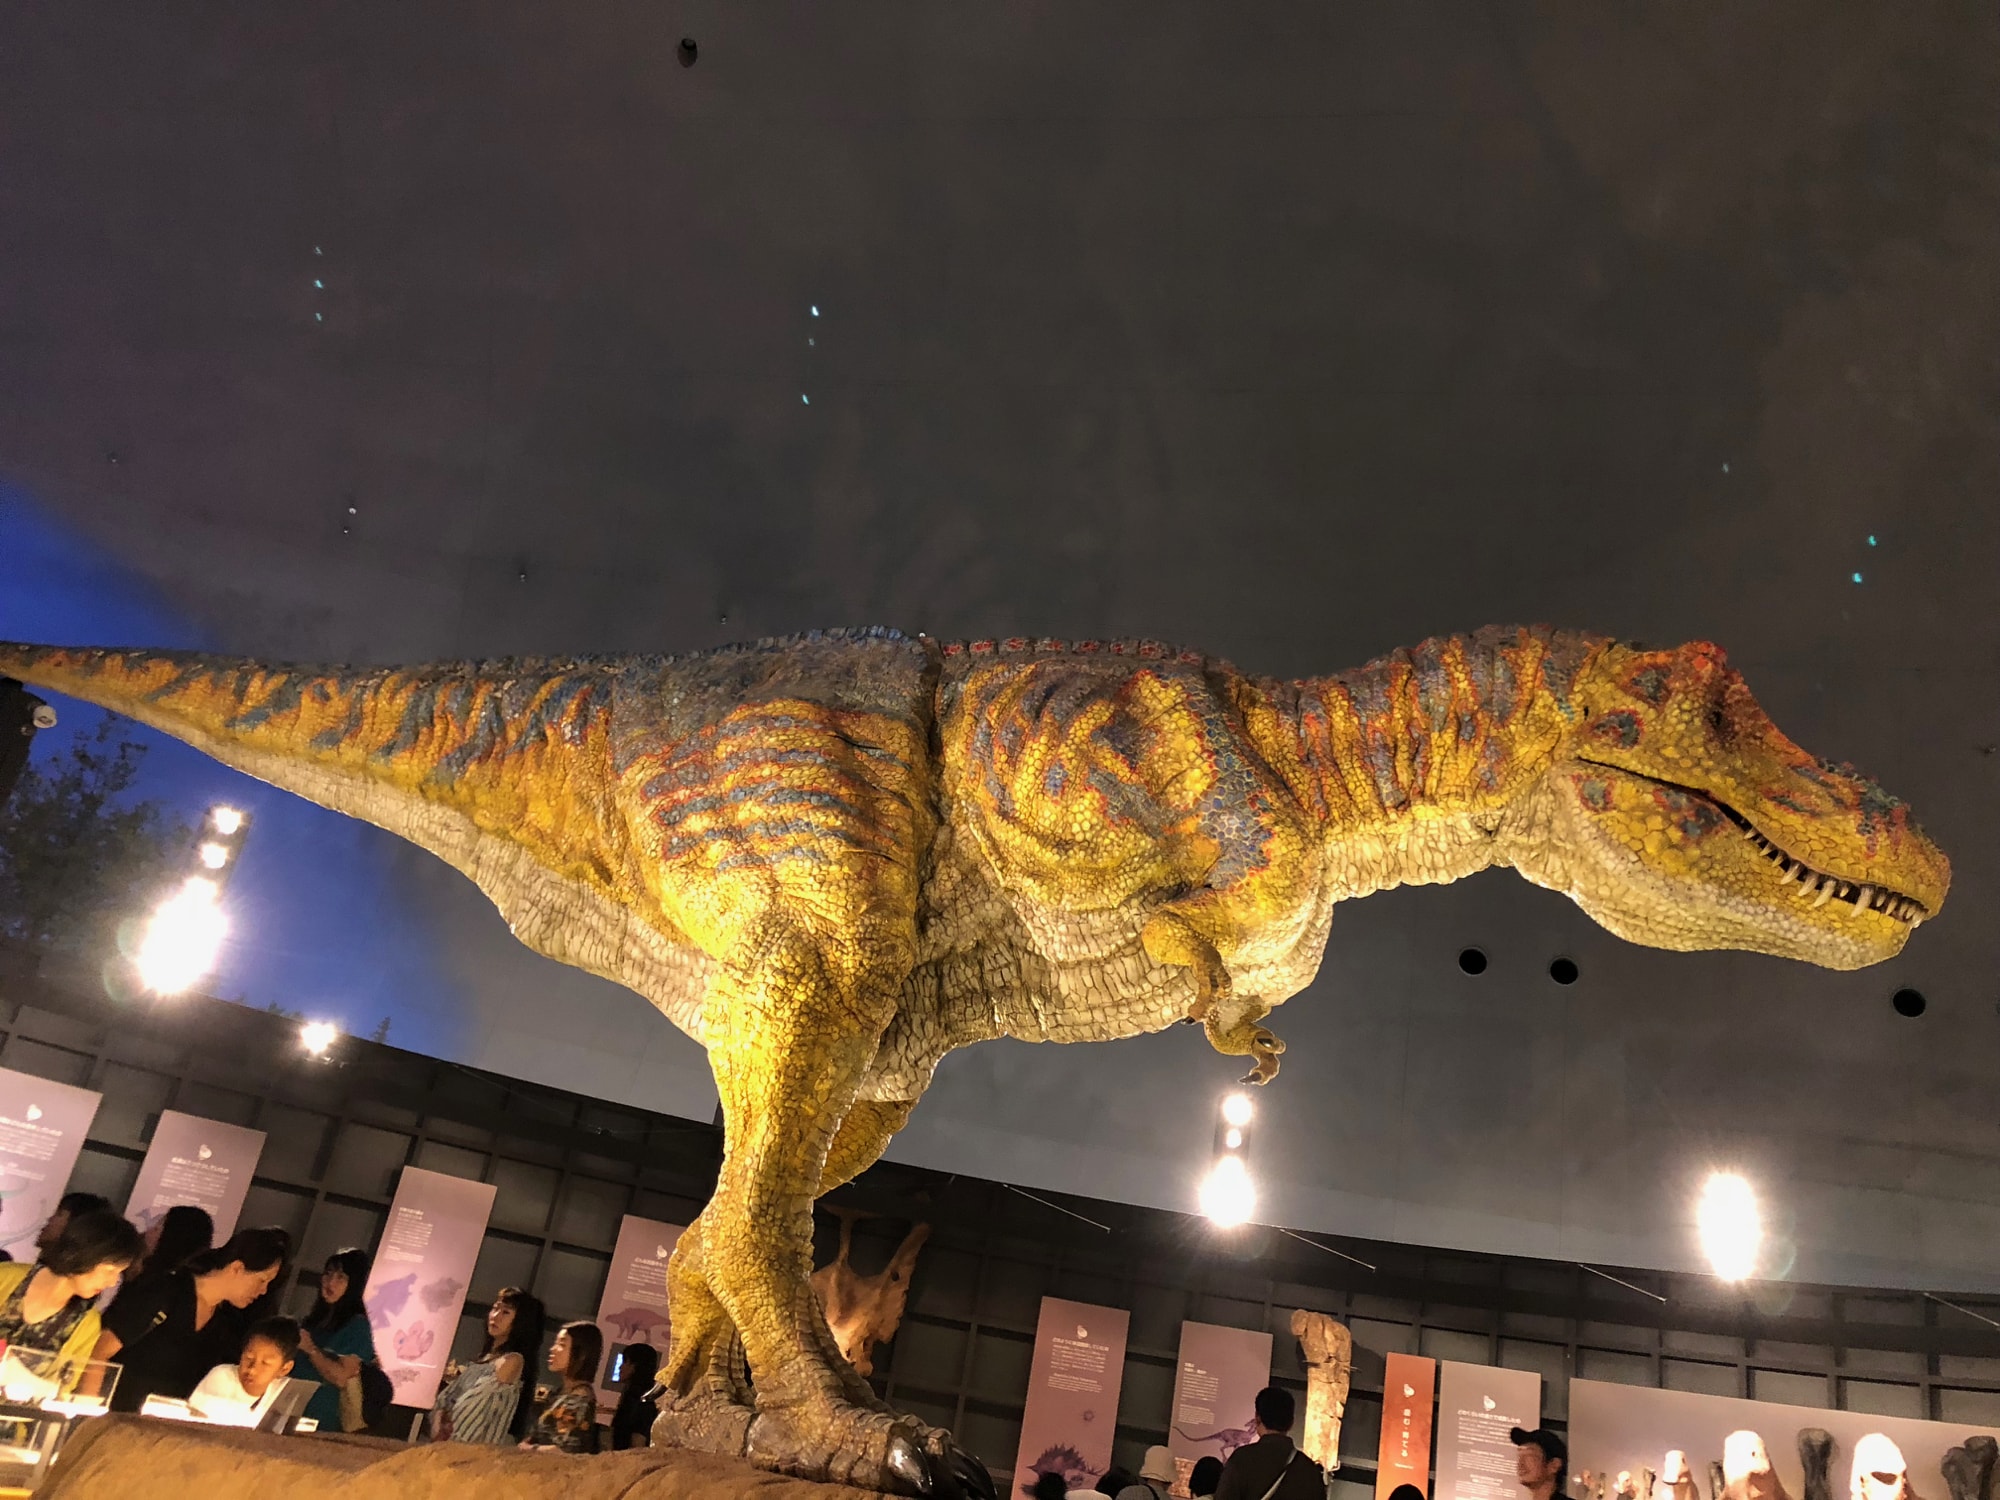 恐竜 ツアー 福井 博物館